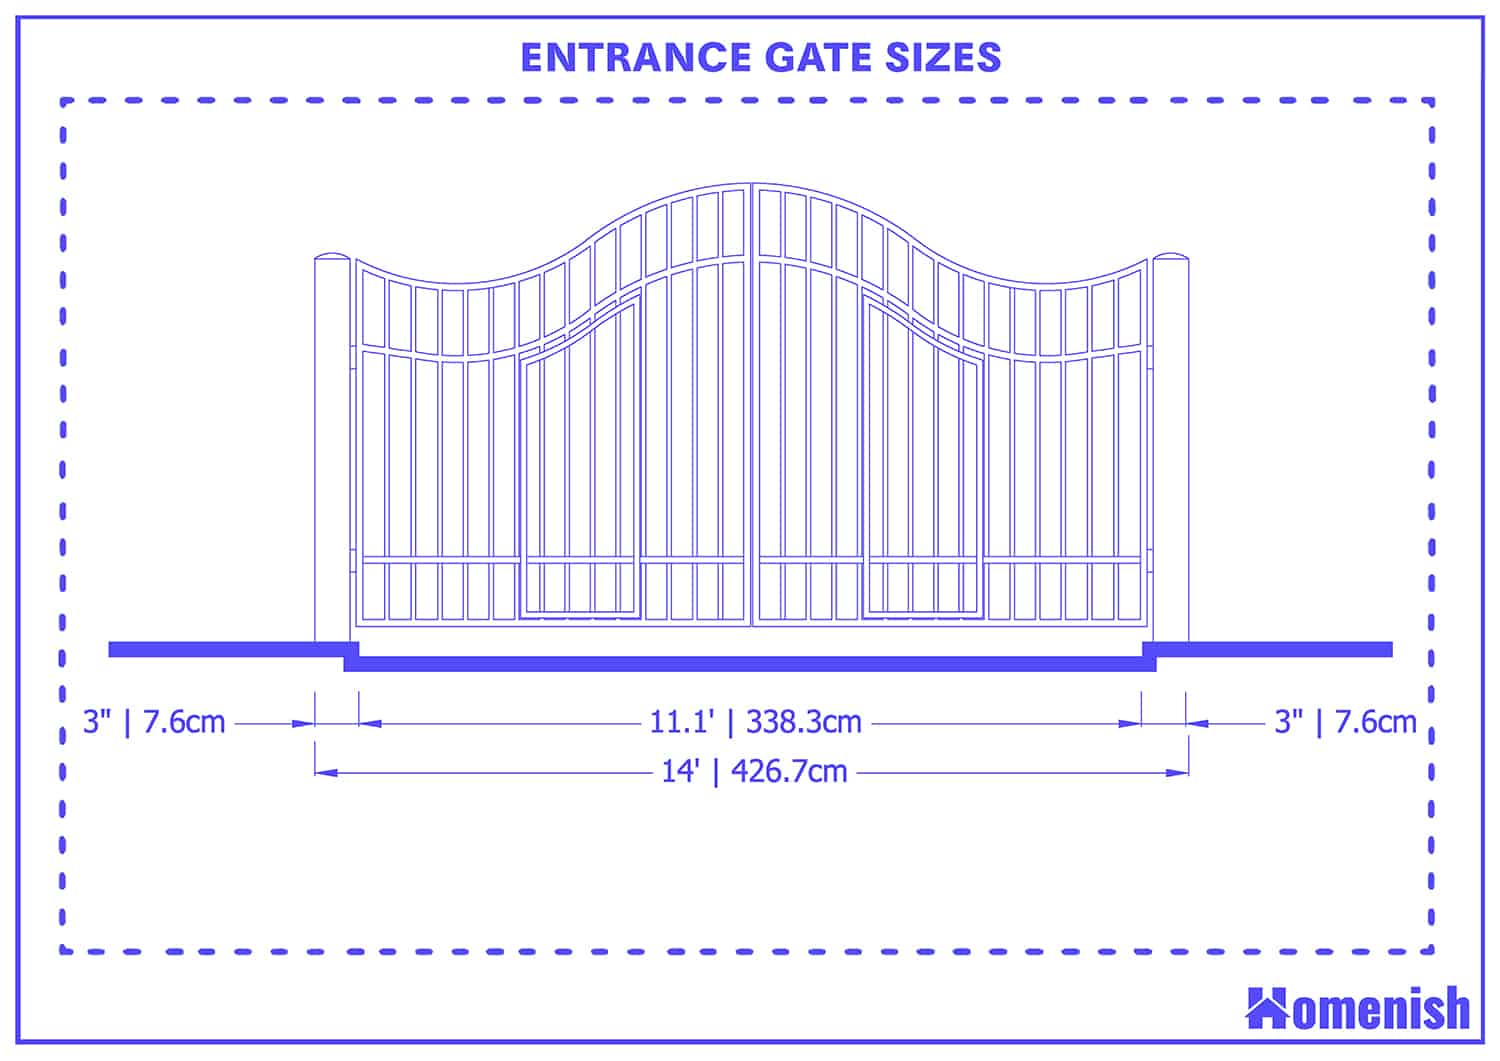 Entrance gate sizes